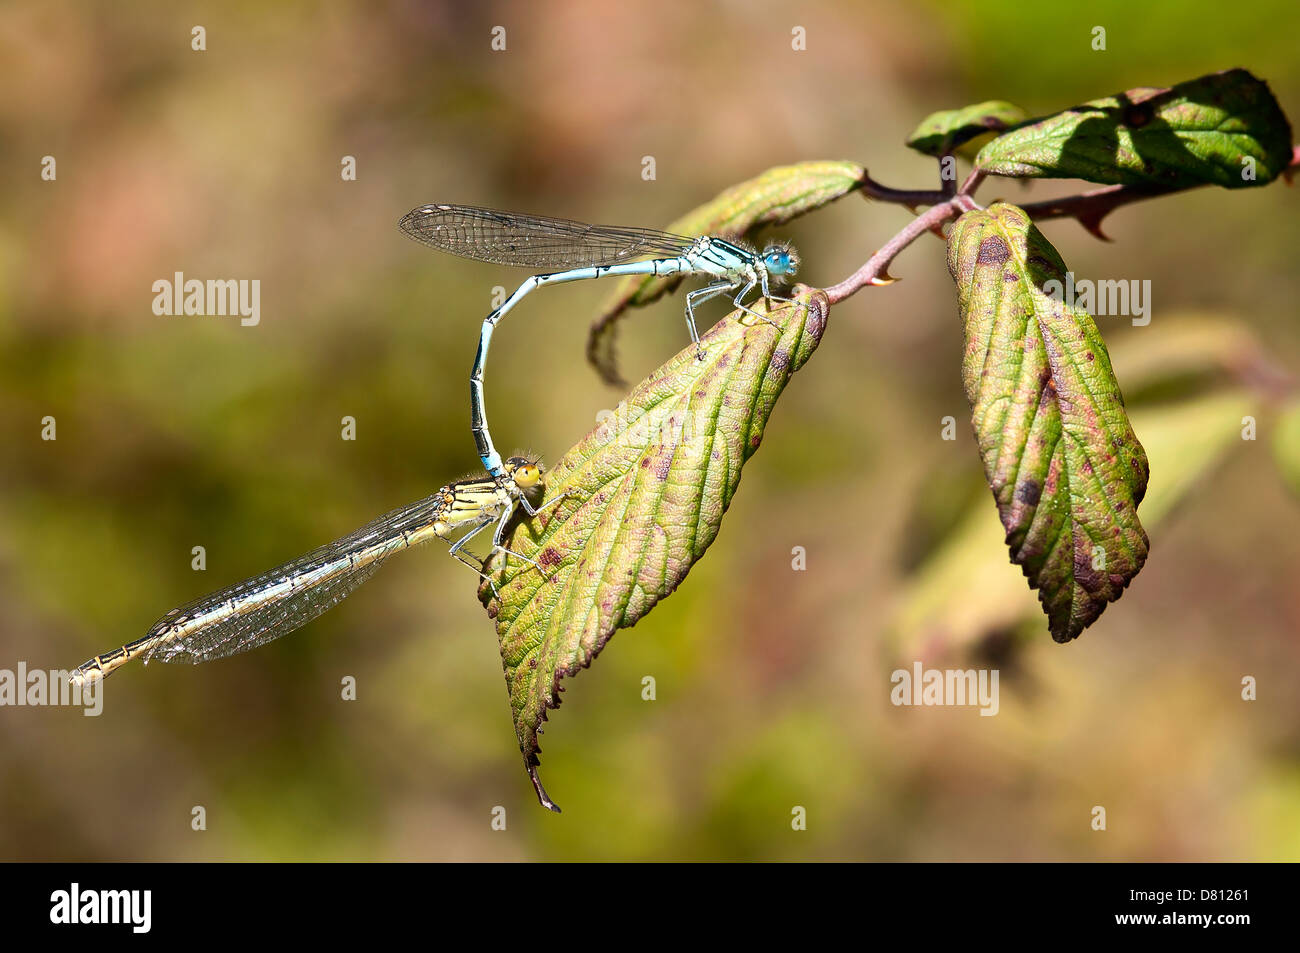 Erythromma lindenii, mating pair, Sesimbra, Portugal Stock Photo